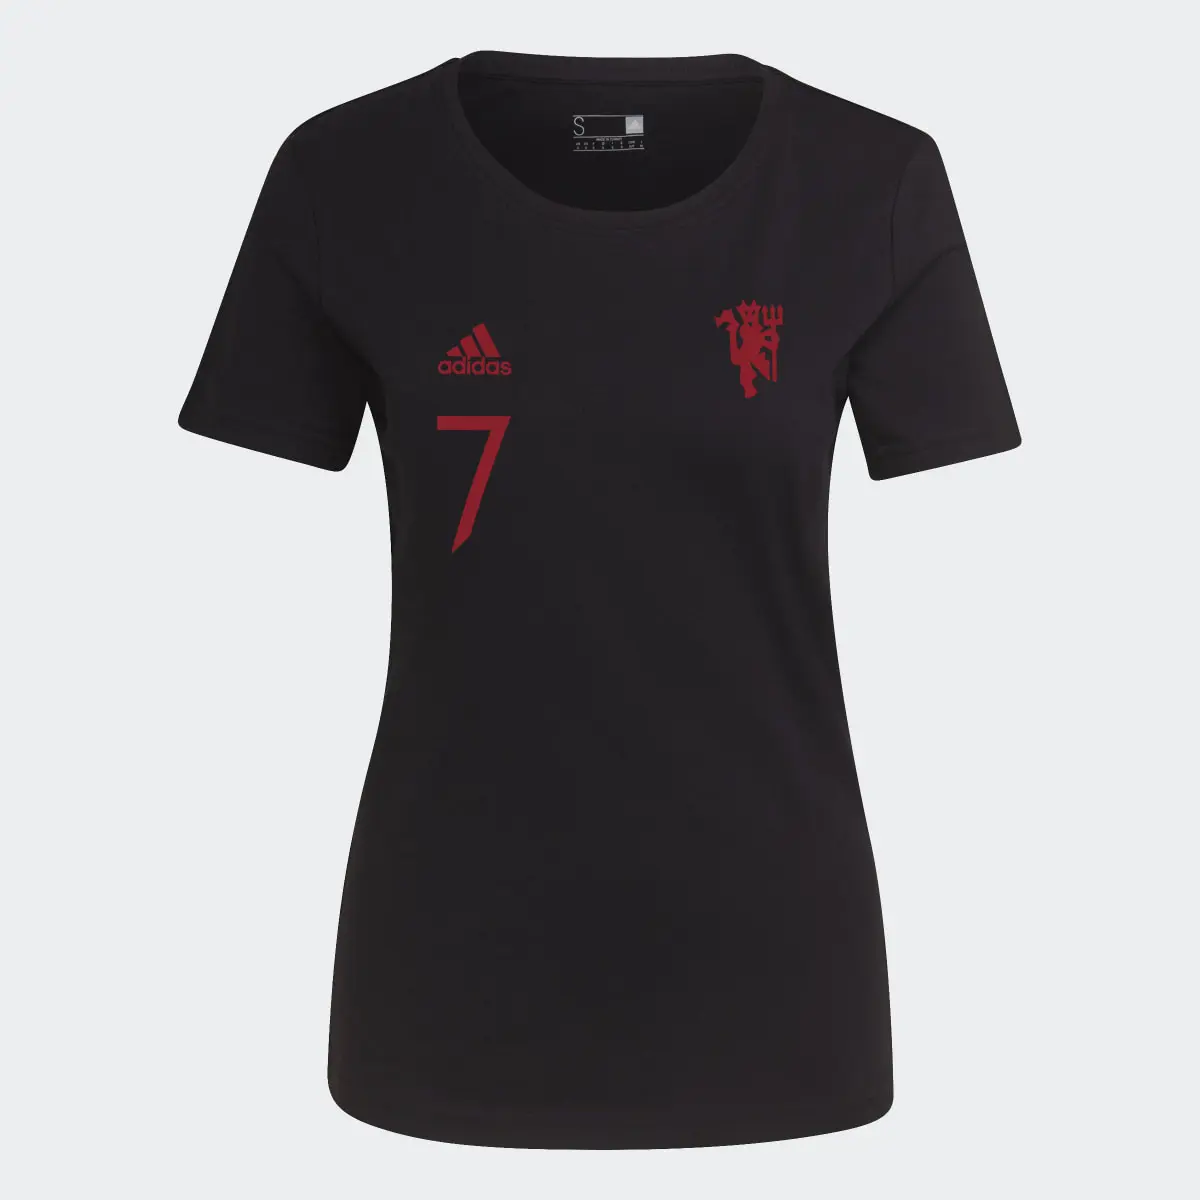 Adidas T-shirt do Manchester United. 1